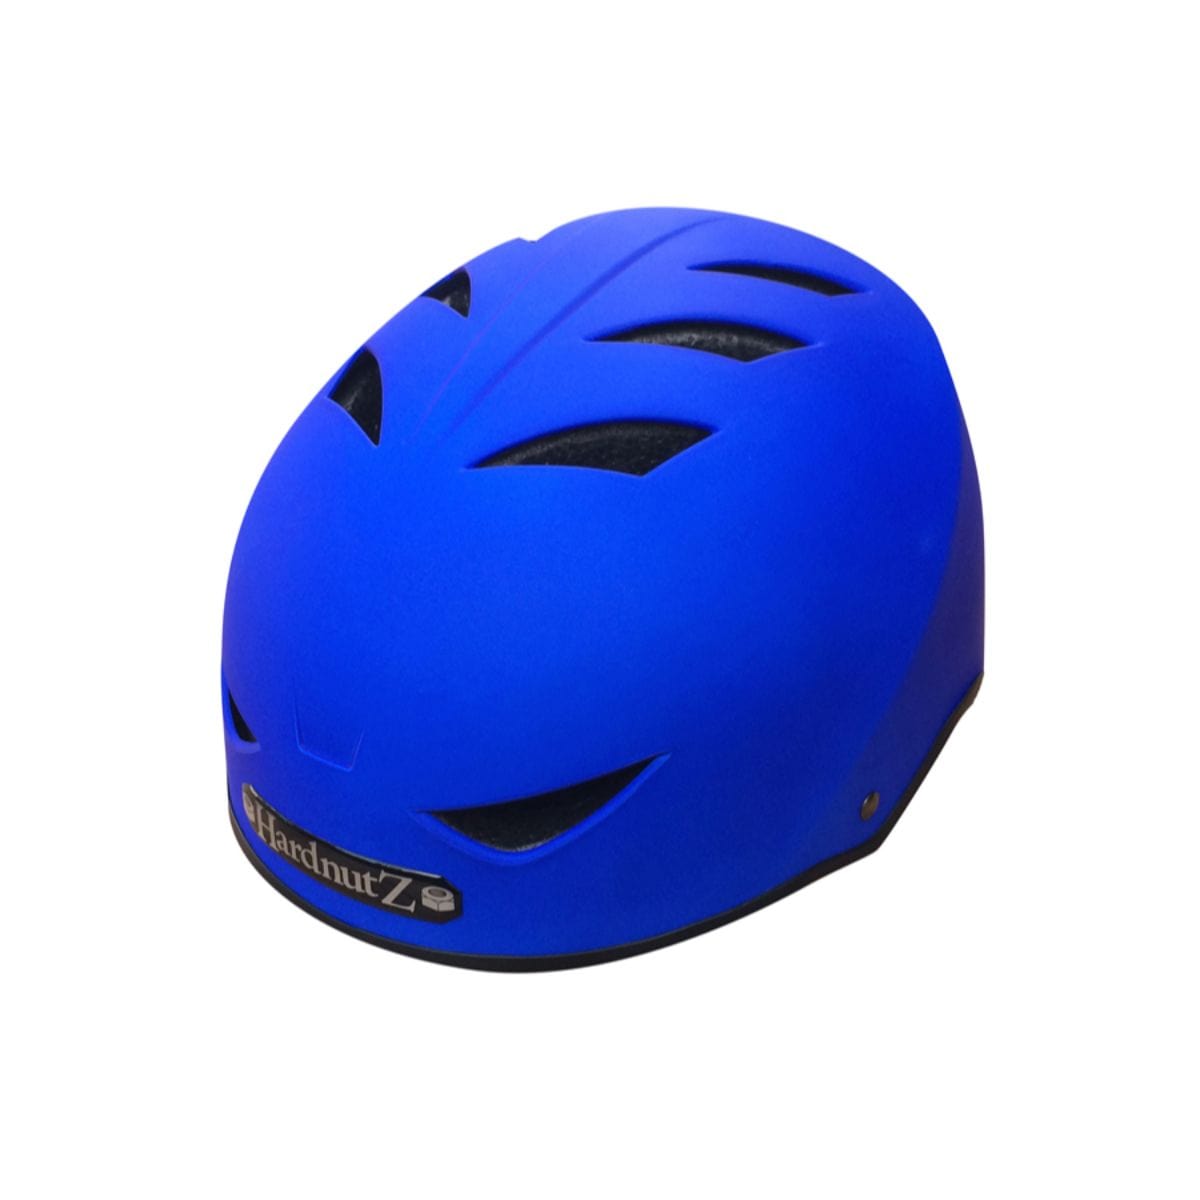 HardnutZ Rubber Street Helmet Blue / Mauve image #1